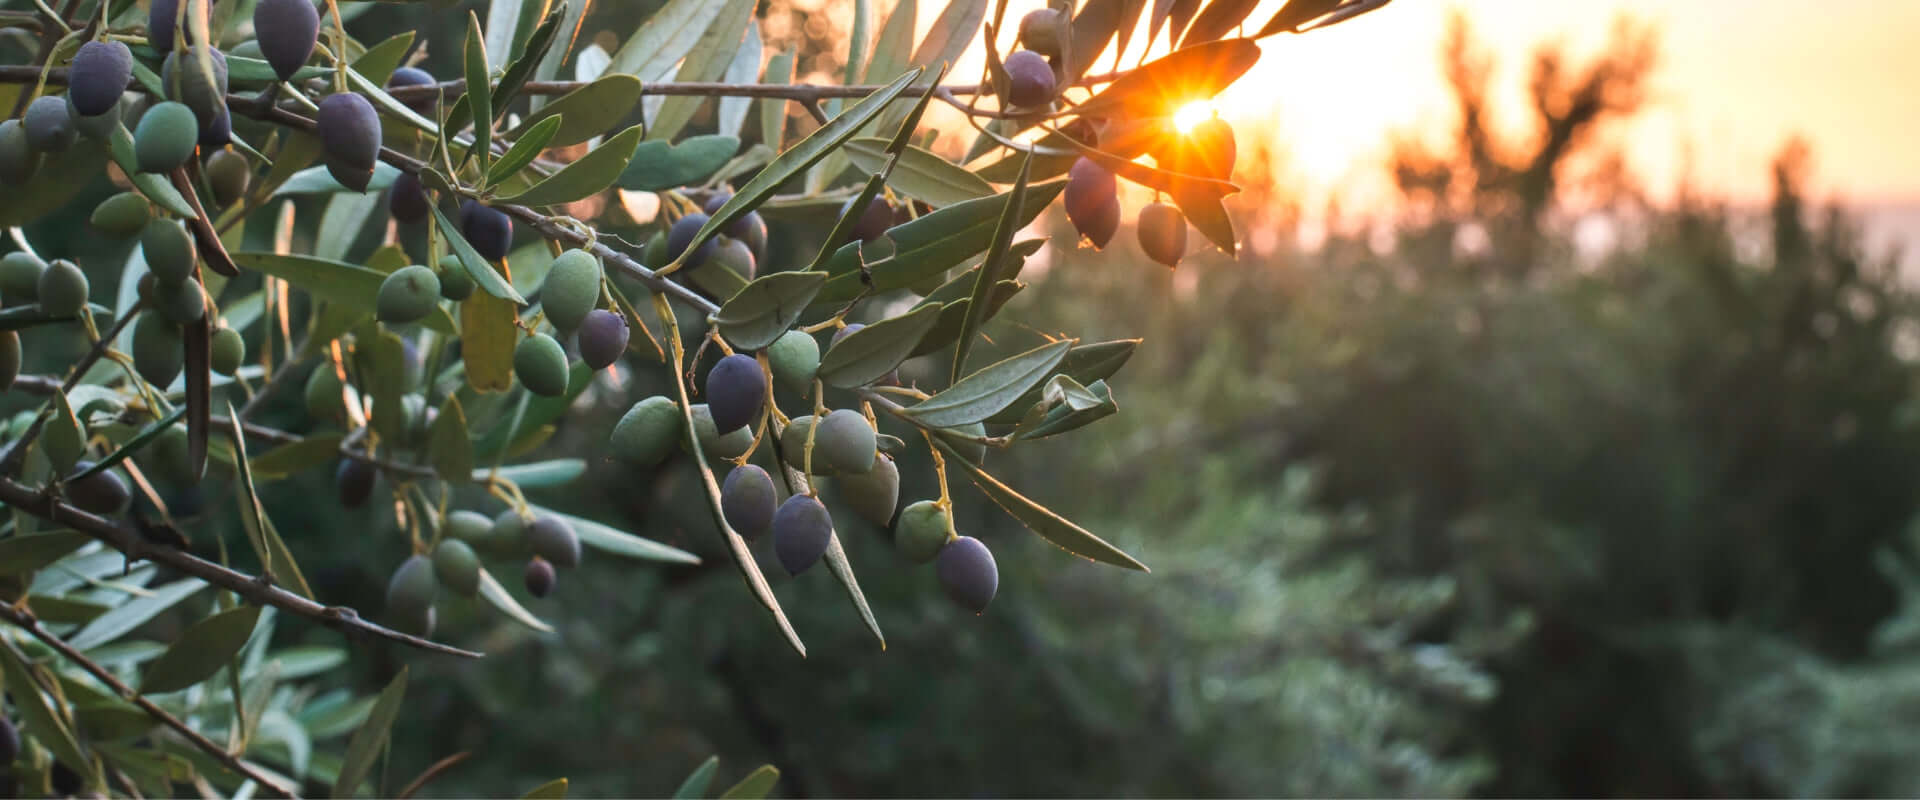 Greek Olives and EVOO